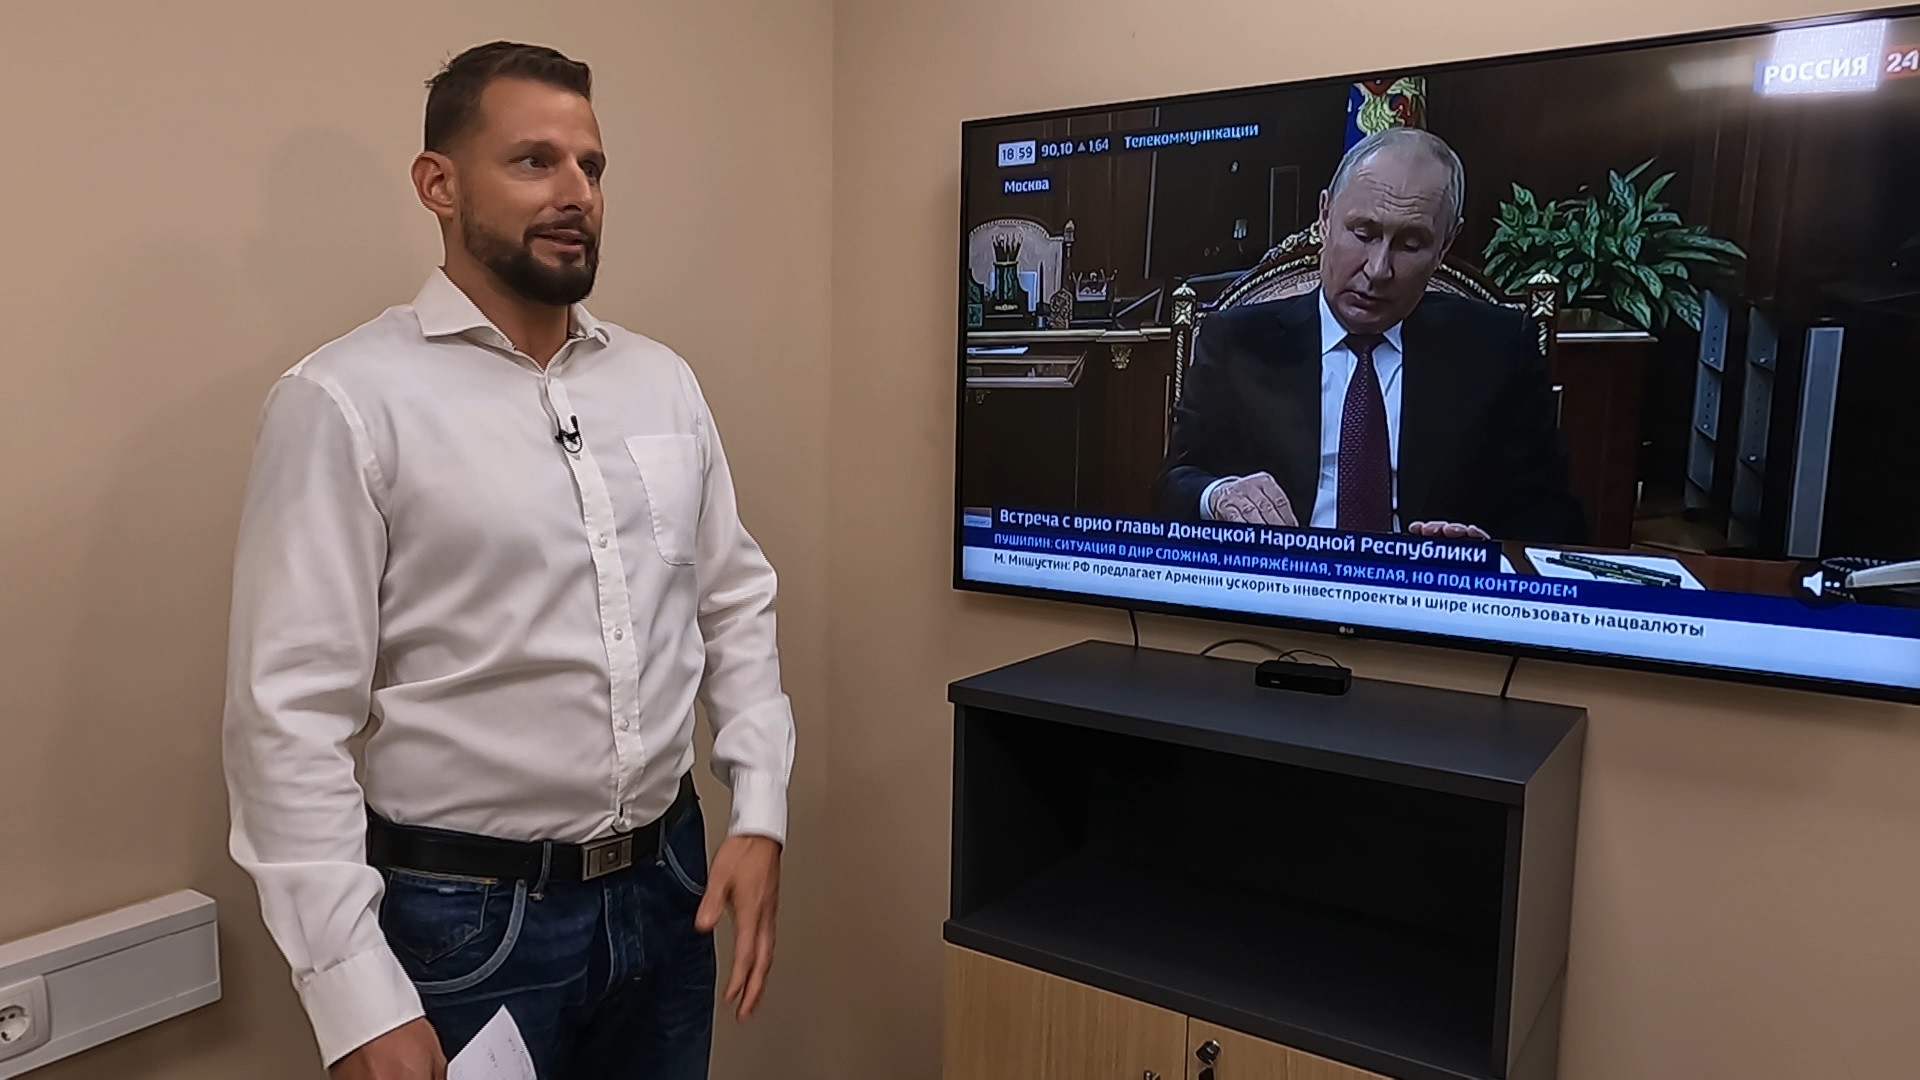 Radar - Igazat mond-e Putyin Prigozsin haláláról?